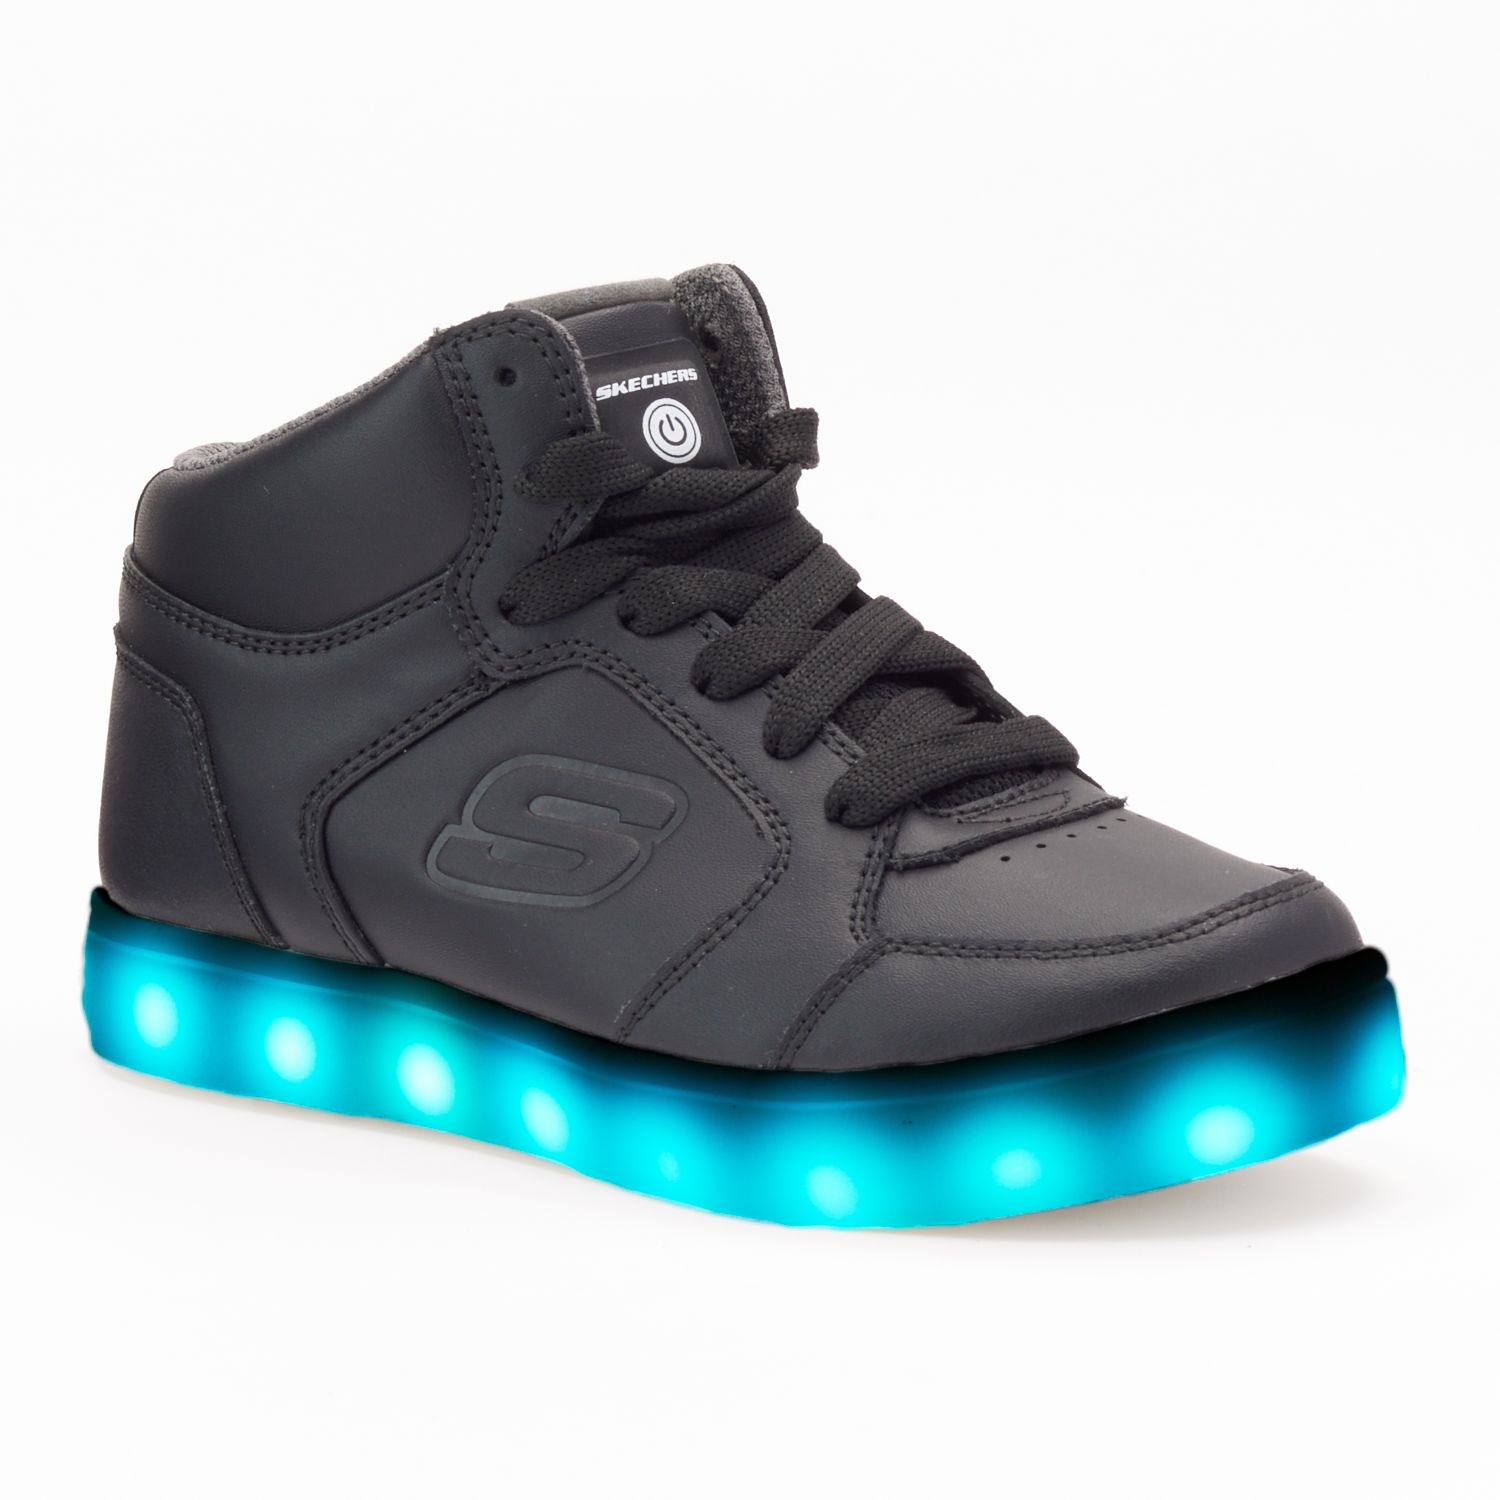 Skechers Energy Lights Kid's Shoes